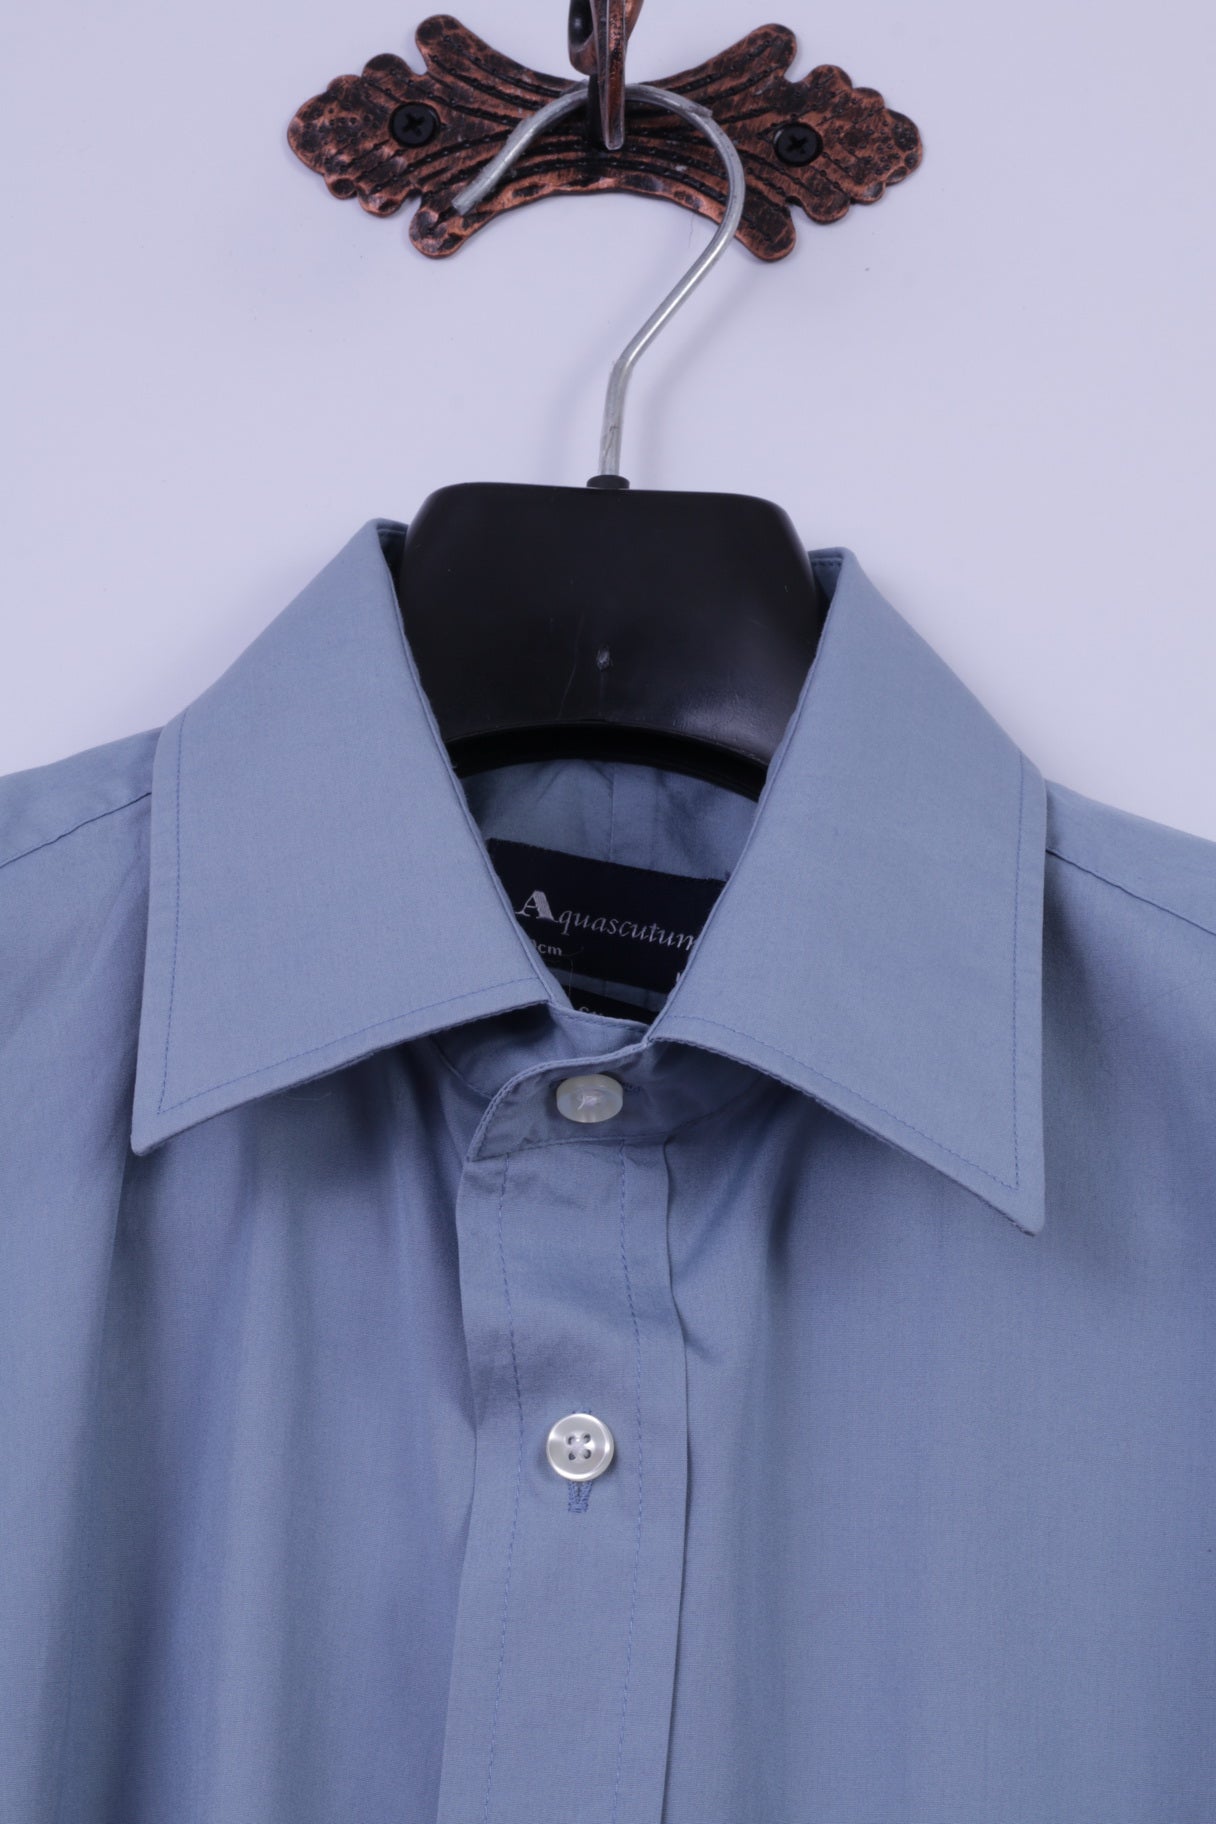 Aquascutum Men 16 S Casual Shirt Blue Slim Fit Cotton Long Sleeve Plain Top